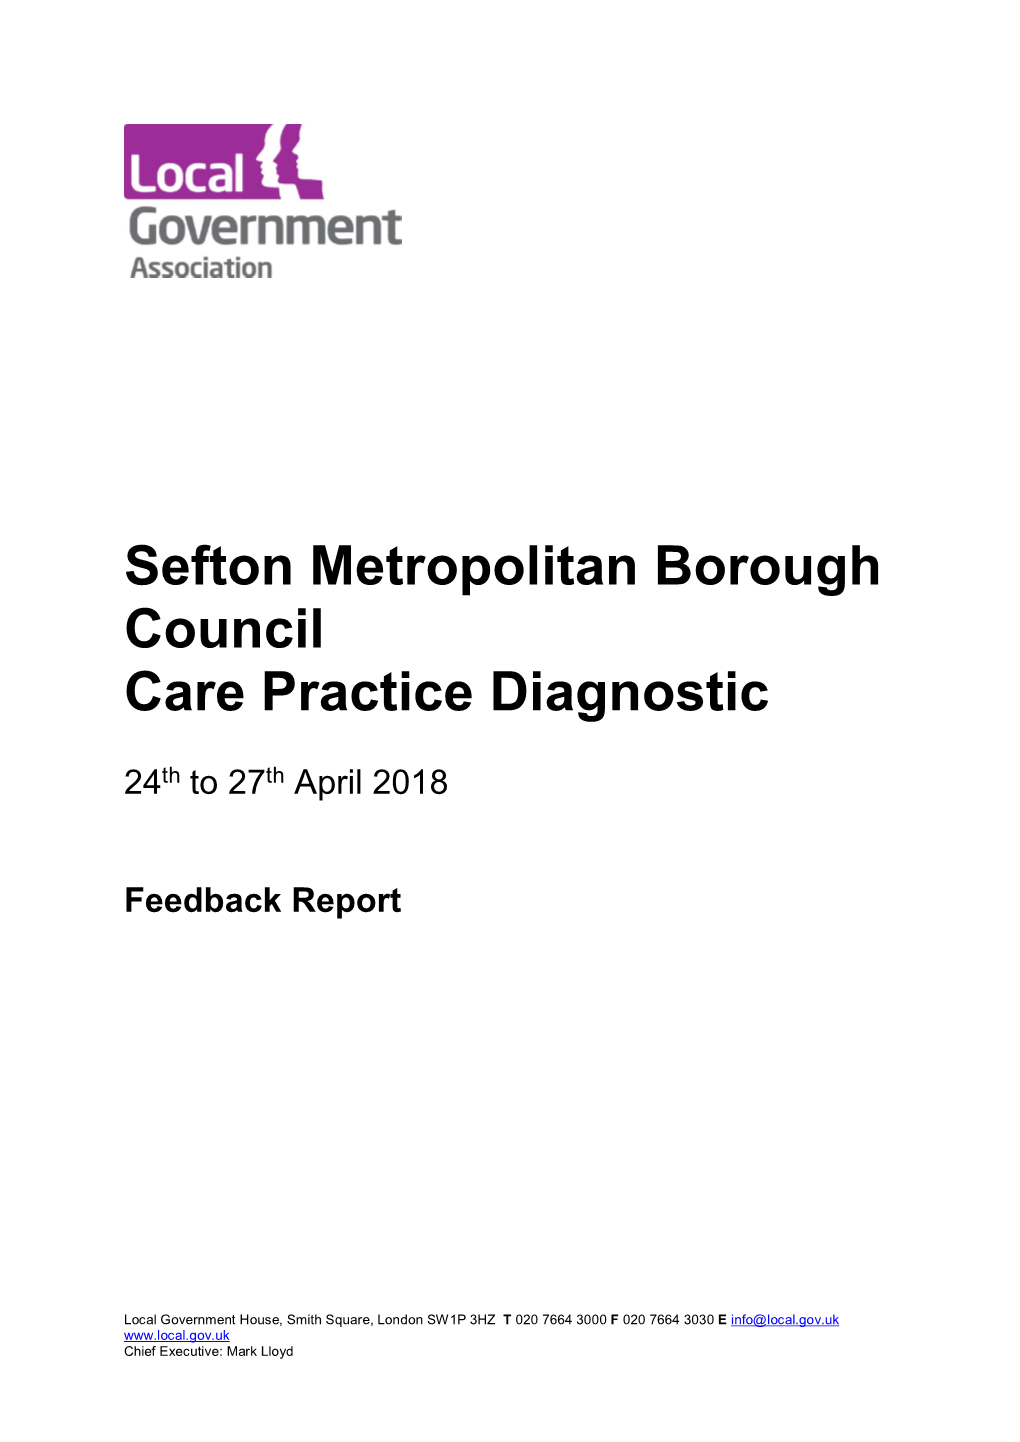 Sefton Metropolitan Borough Council Care Practice Diagnostic